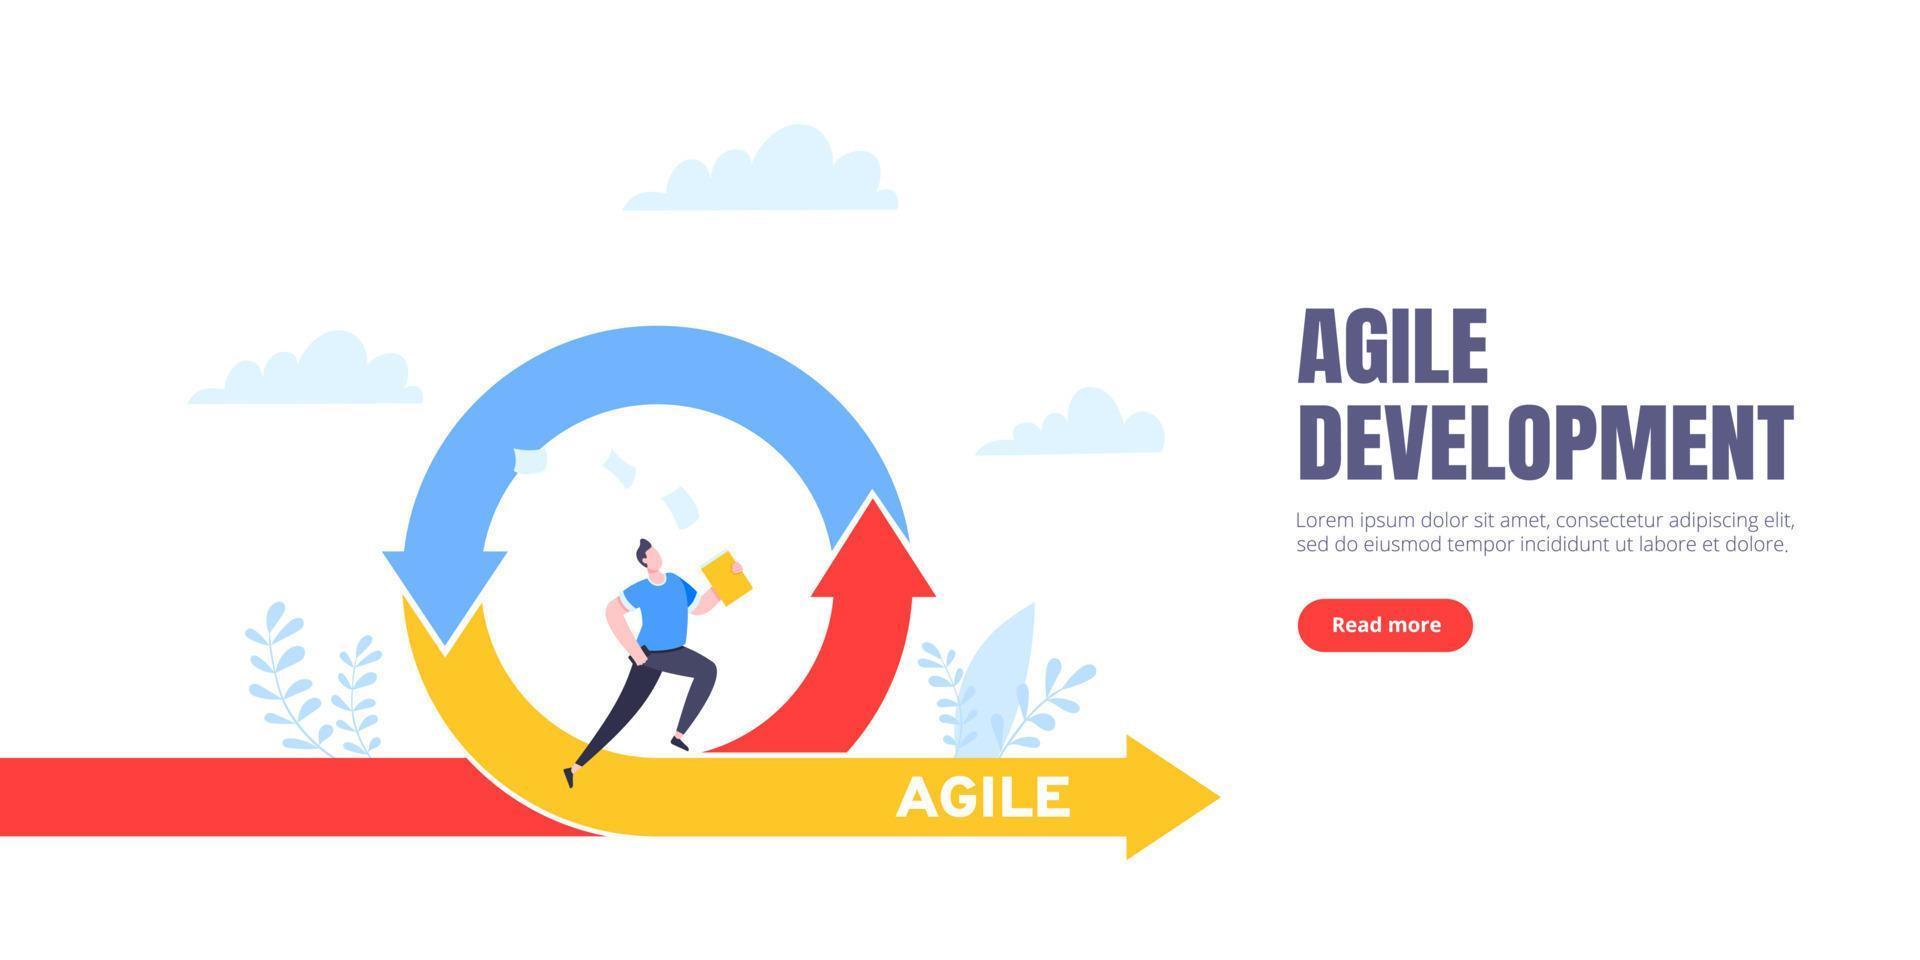 Agile development methodology business concept flat style design vector illustration isolated on white background.